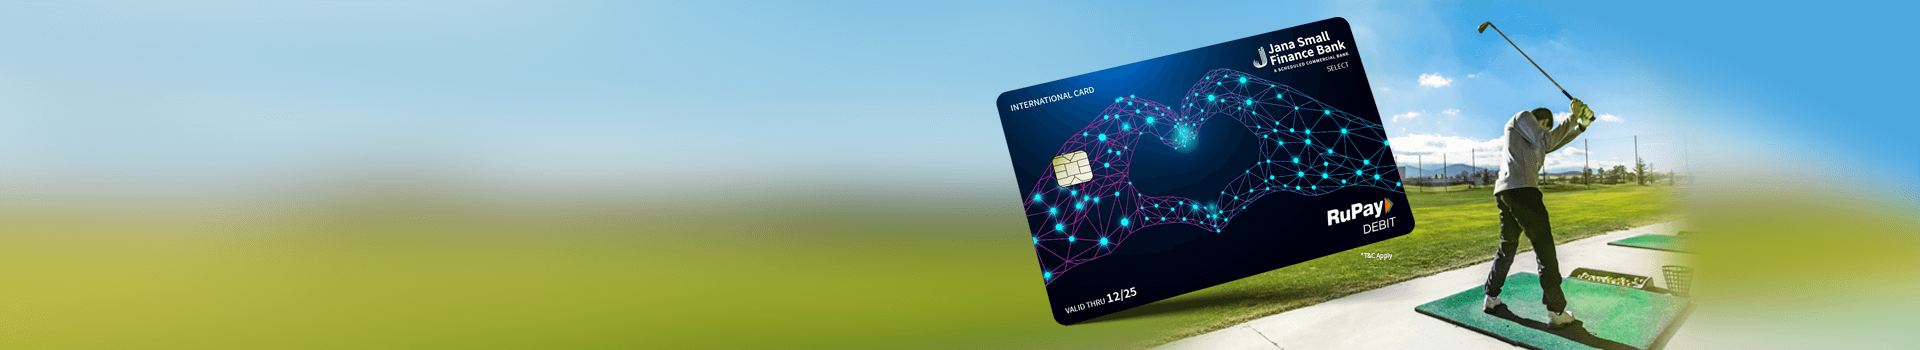 RuPay Debit Cards - Jana Bank